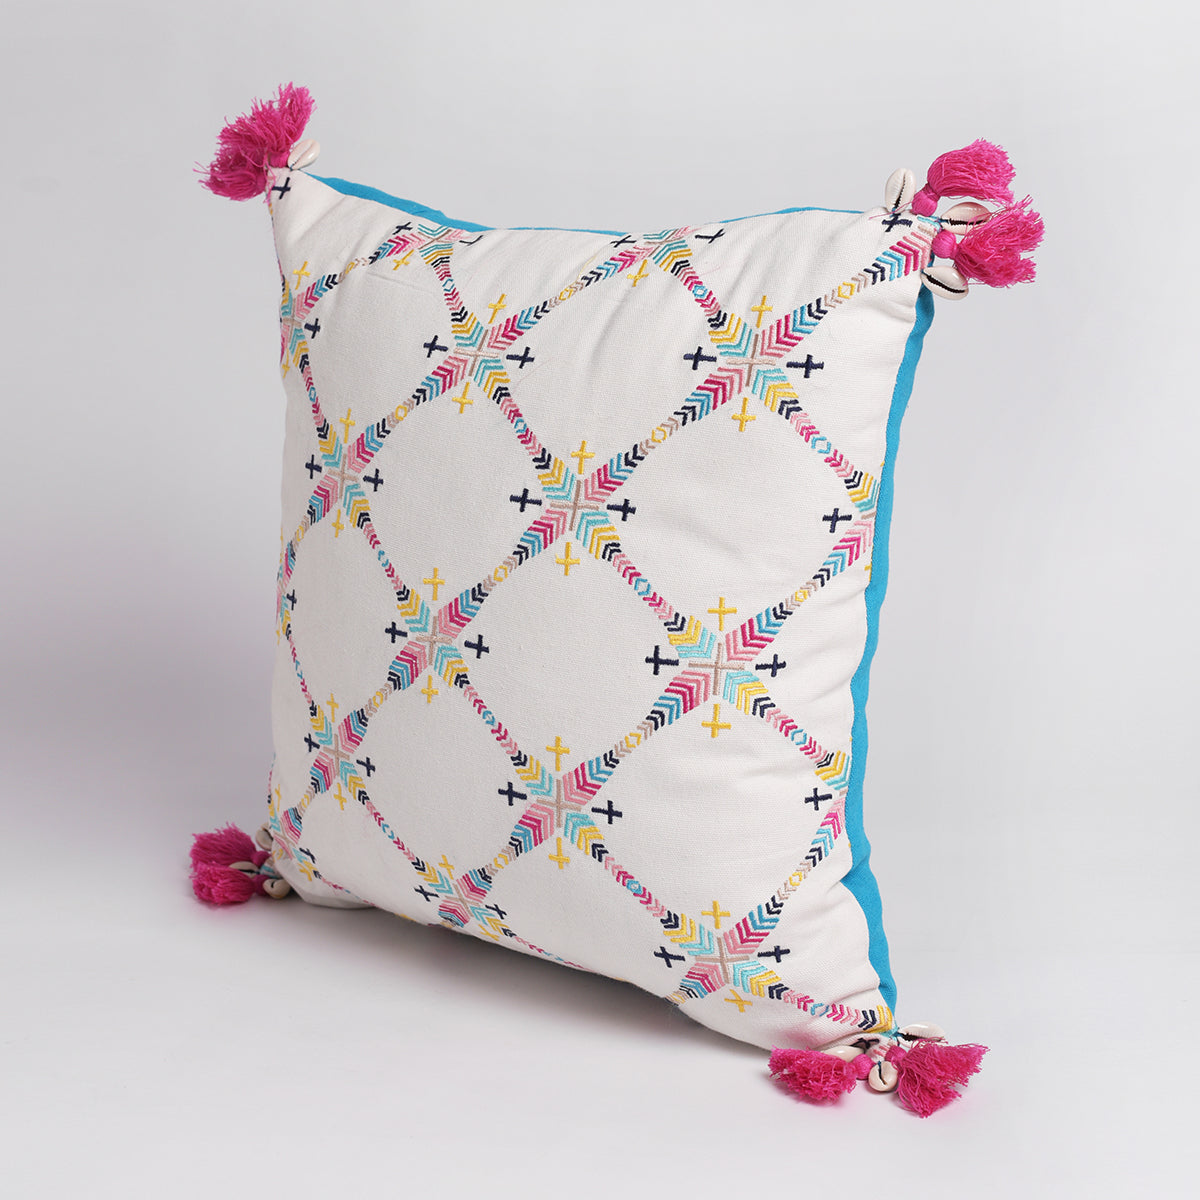 Banjara - Embroidered multicoloured Peruvian cushion cover 16X16 inches